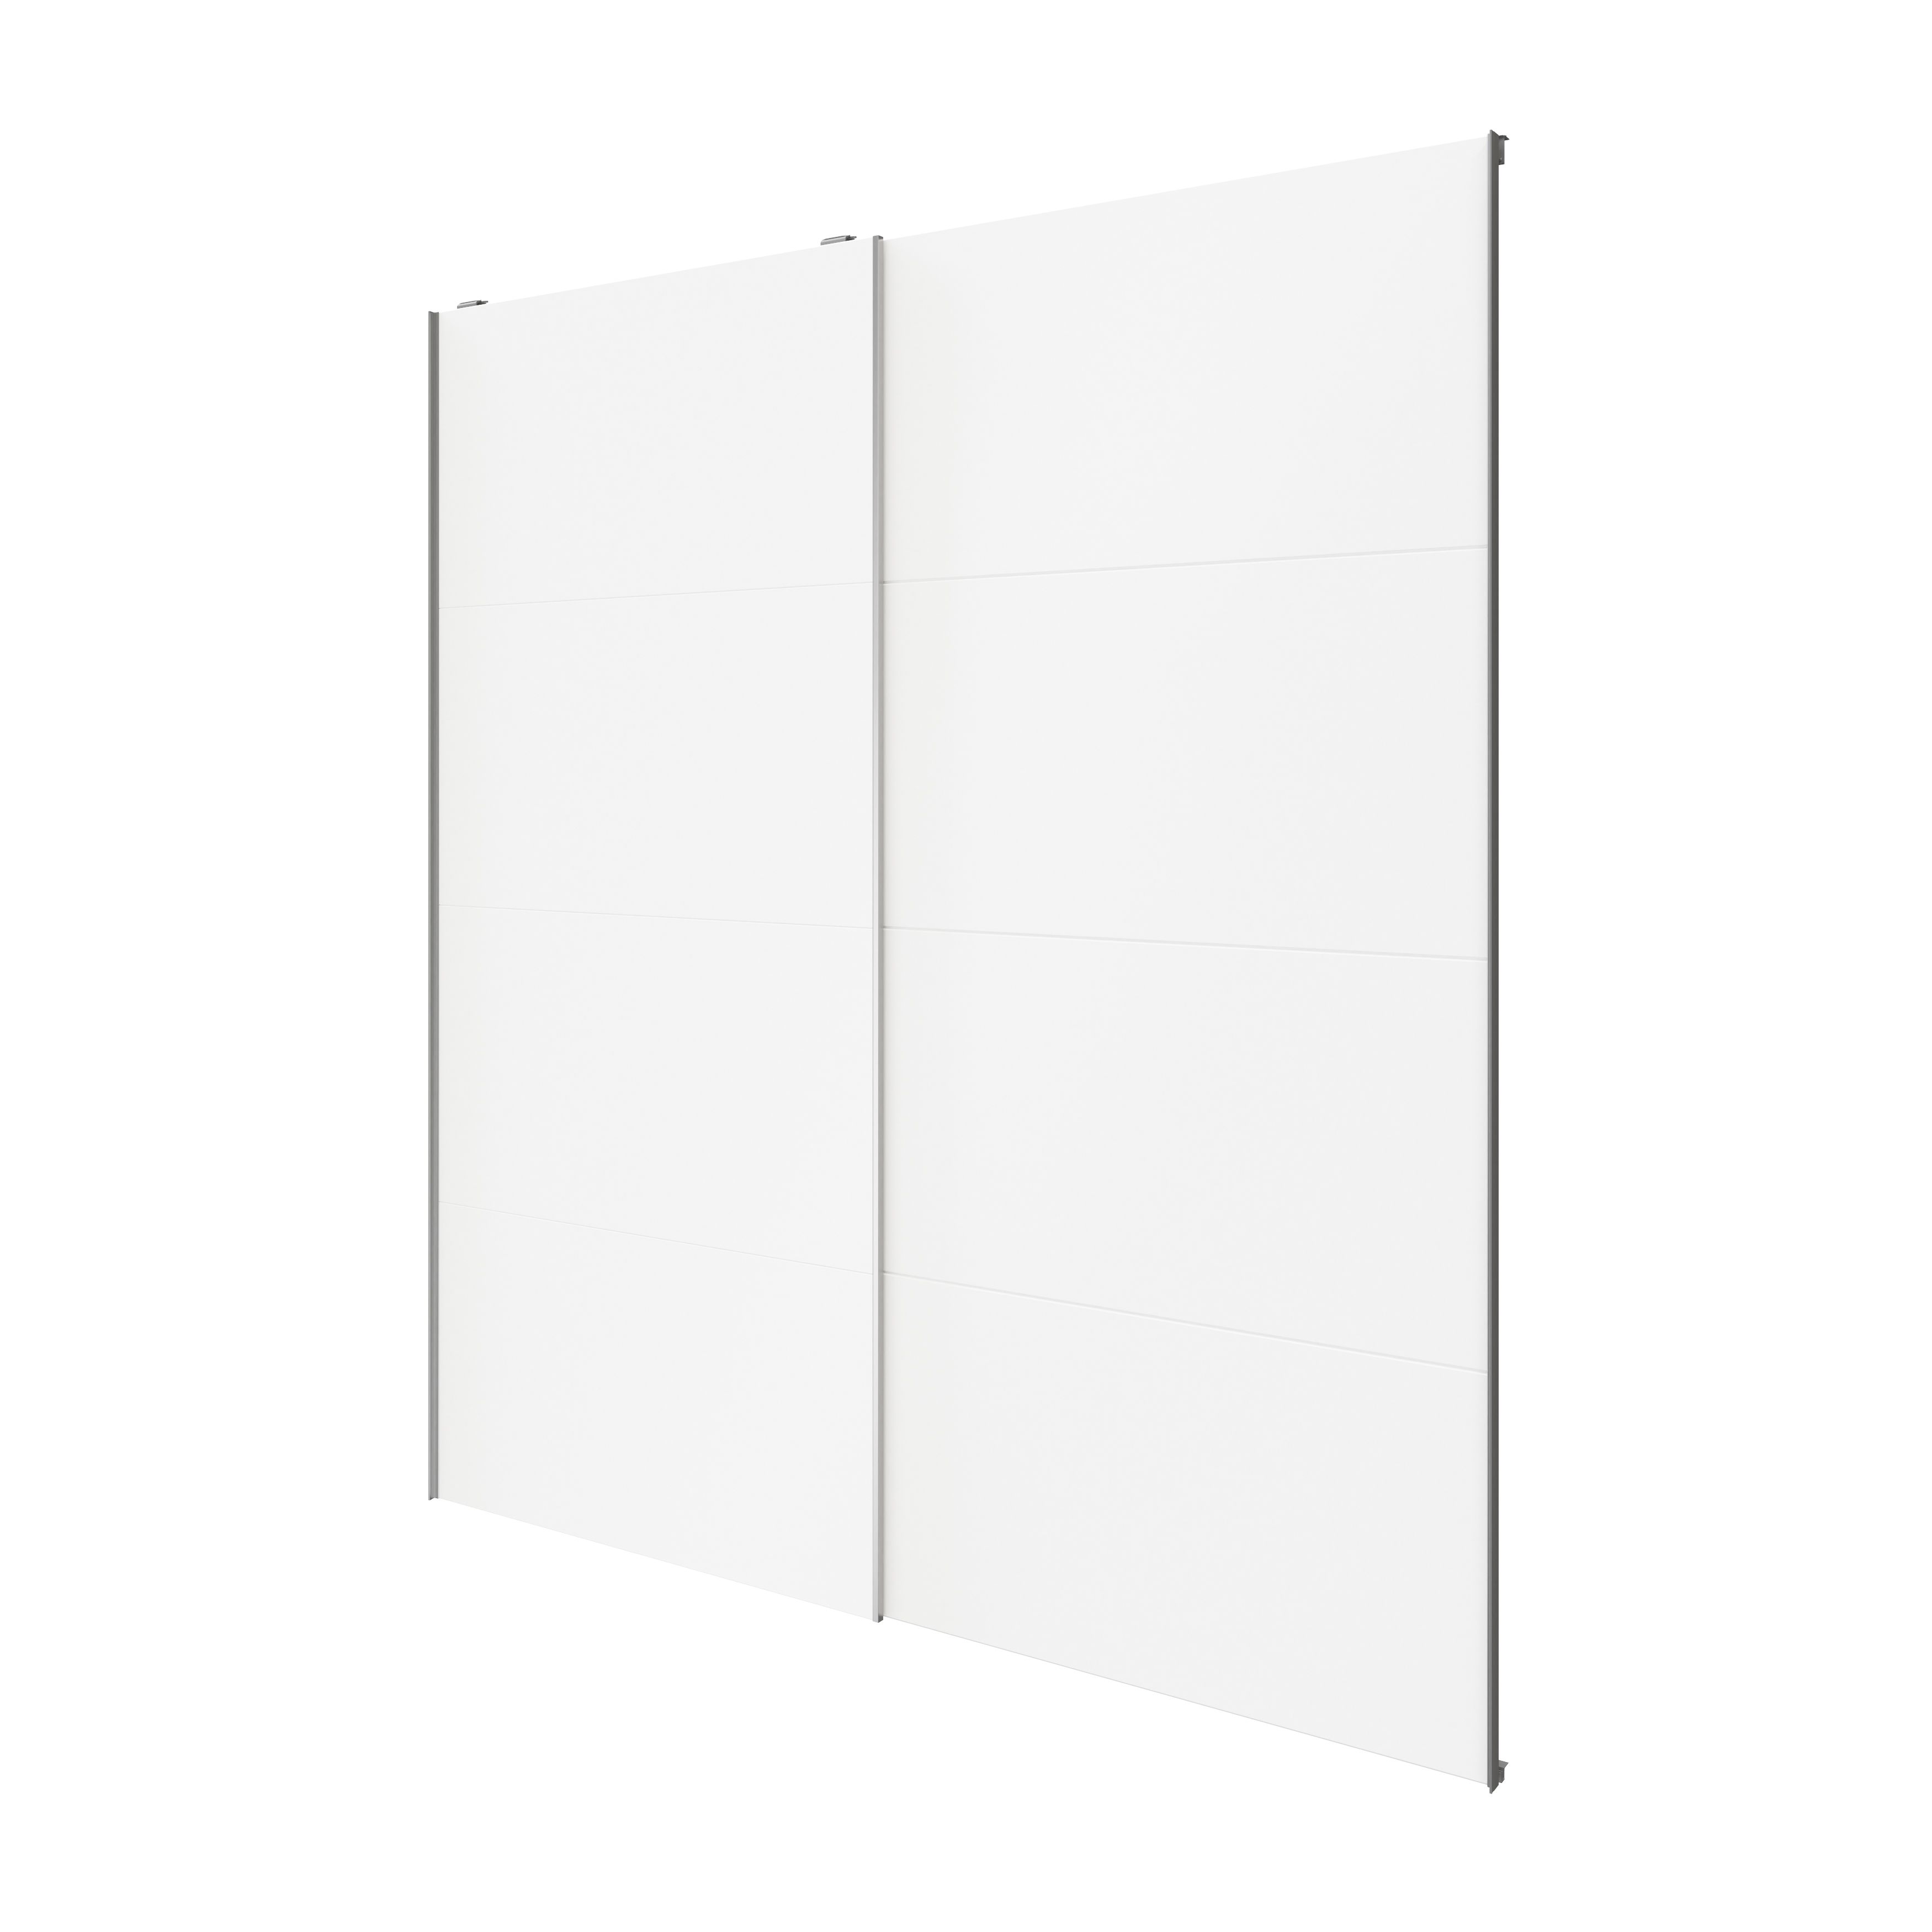 Atomia White 2 door Sliding Wardrobe Door kit (H)2250mm (W)2000mm